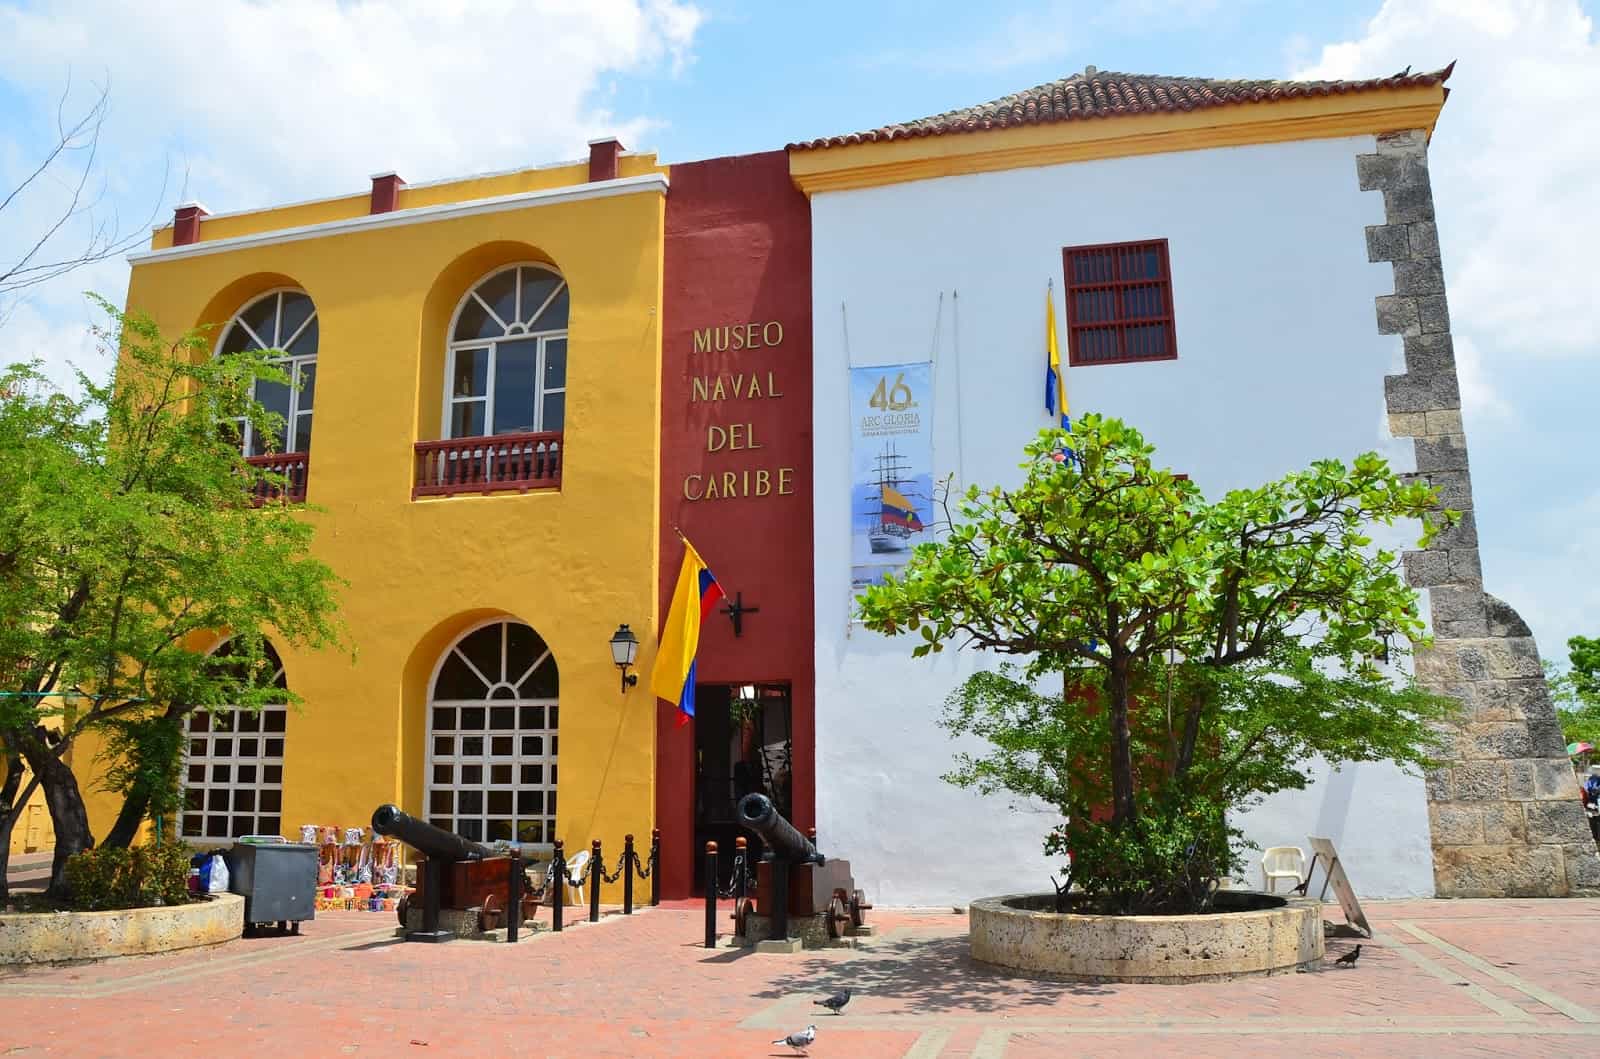 Caribbean Naval Museum in Cartagena, Bolívar, Colombia